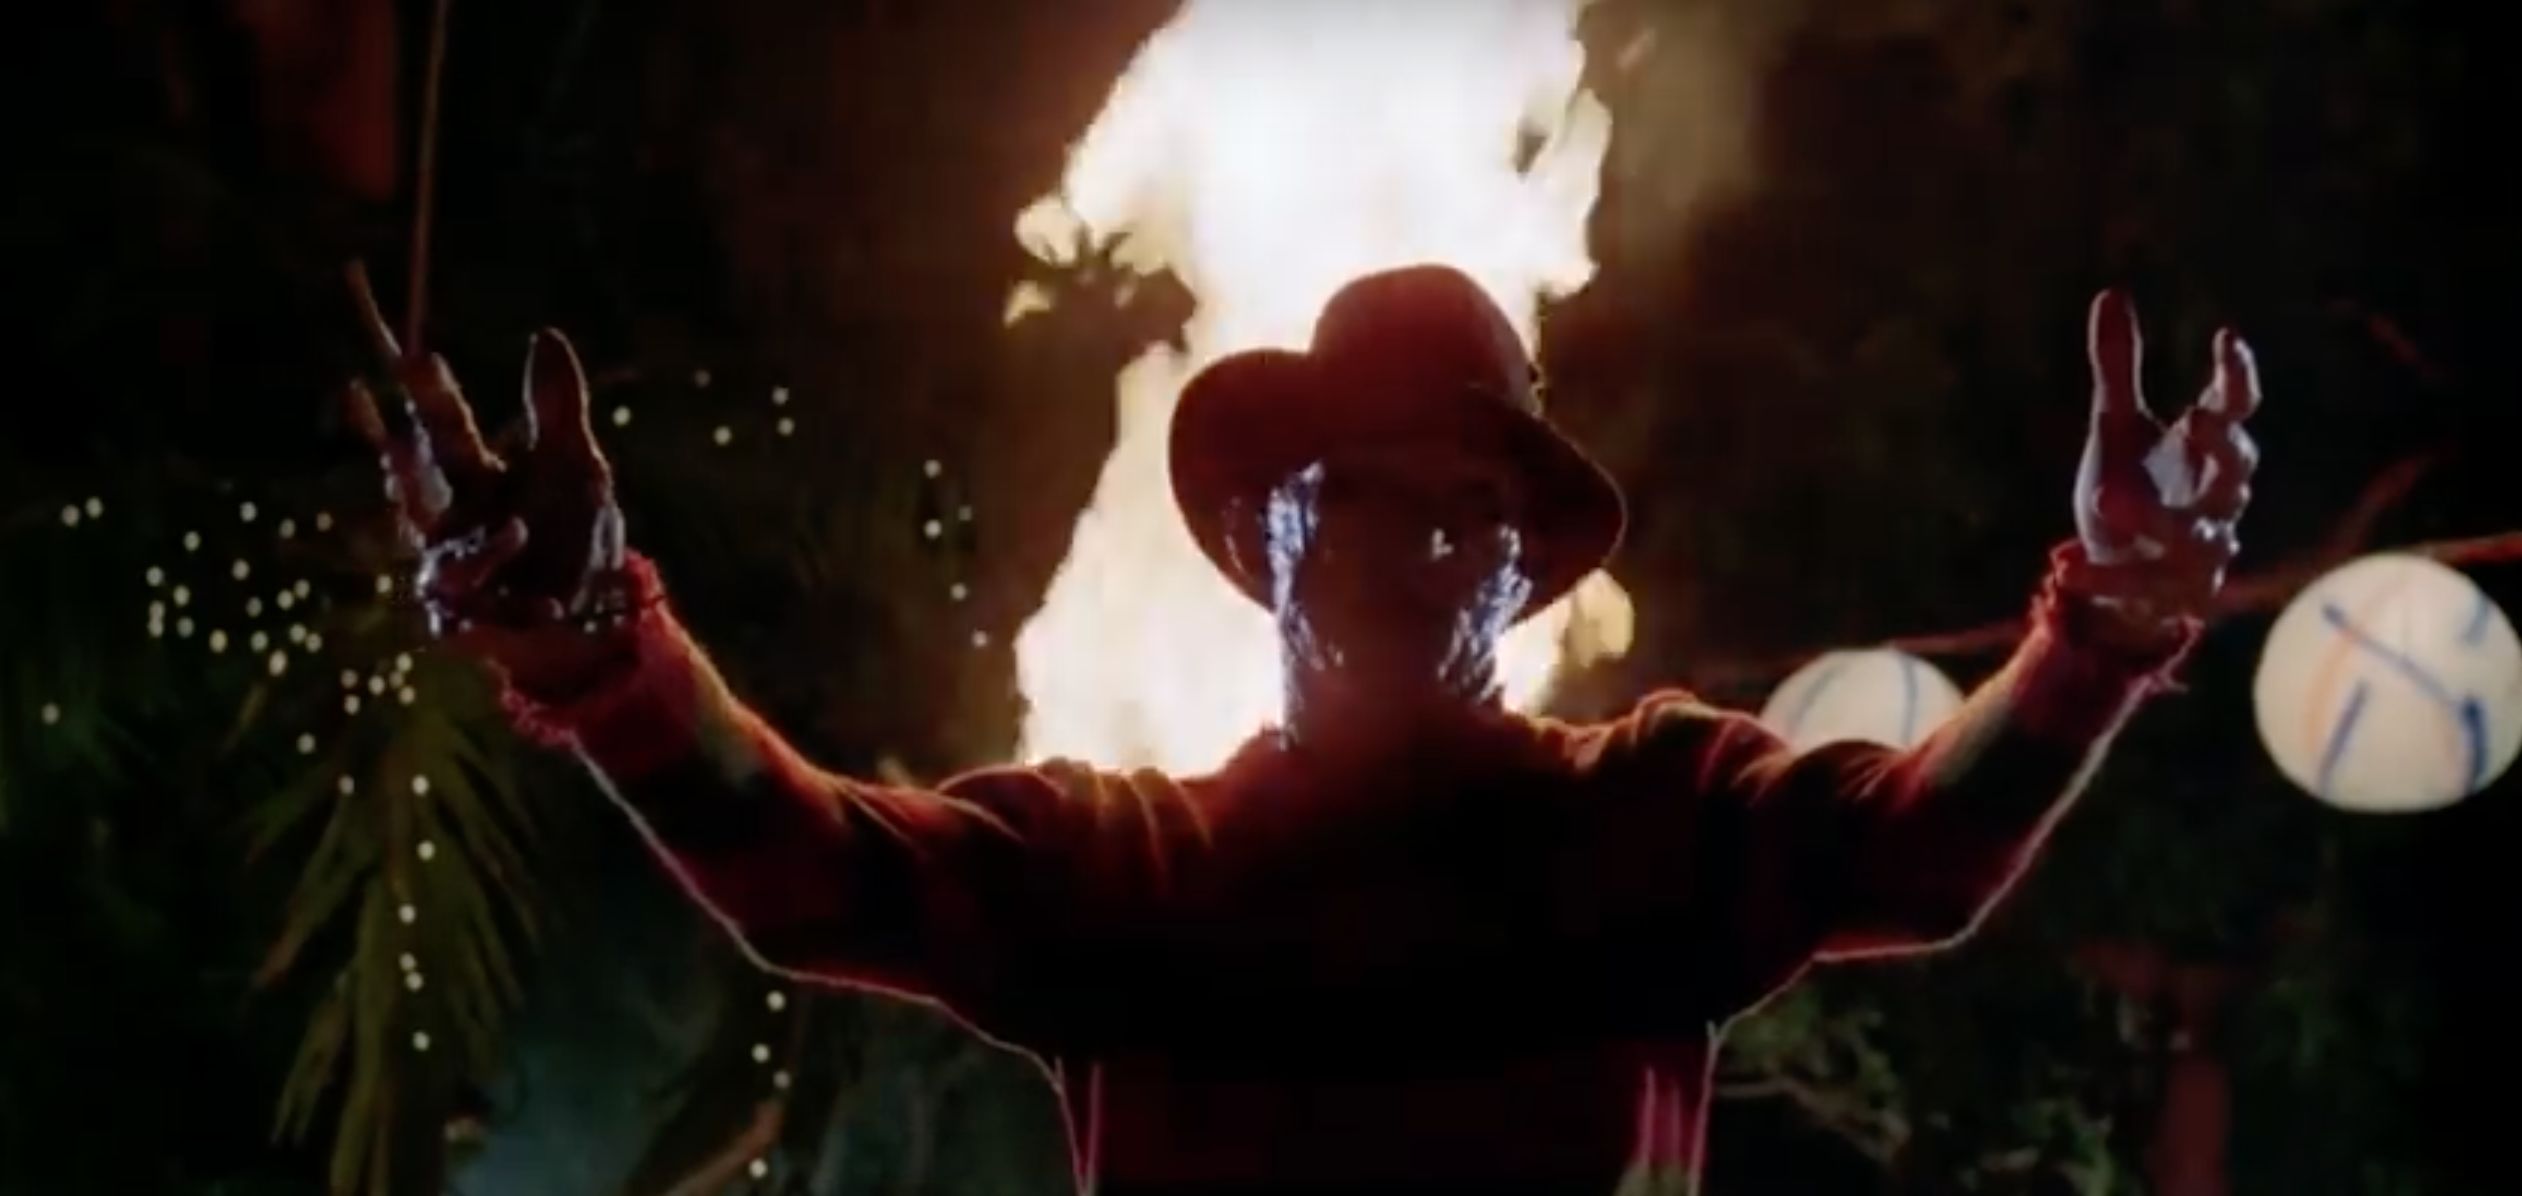 Robert Englund up to play Freddy Krueger again in a Nightmare on Elm Street  film | SYFY WIRE